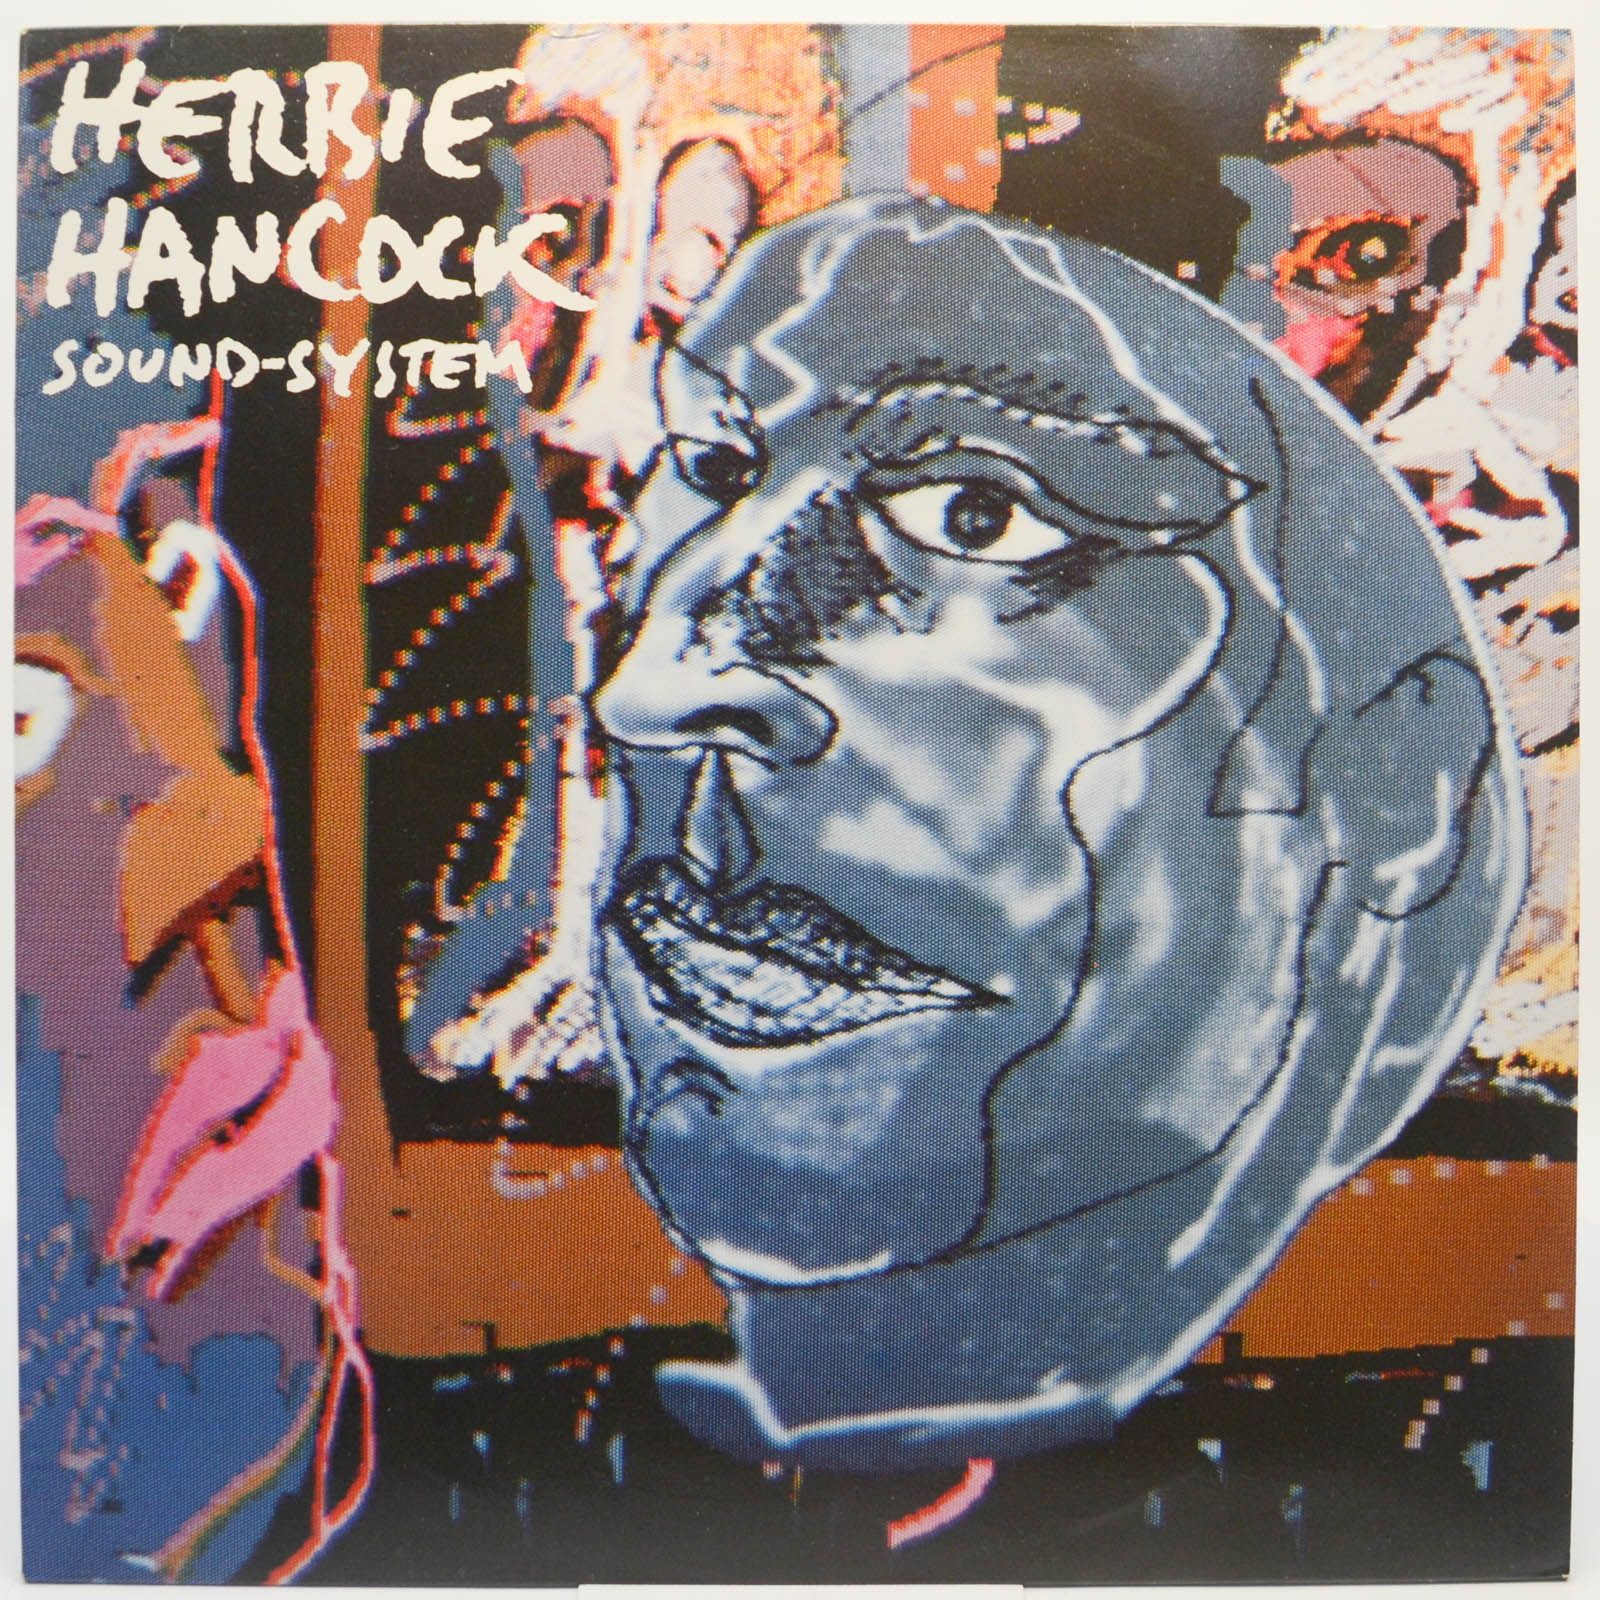 Herbie Hancock — Sound-System, 1984